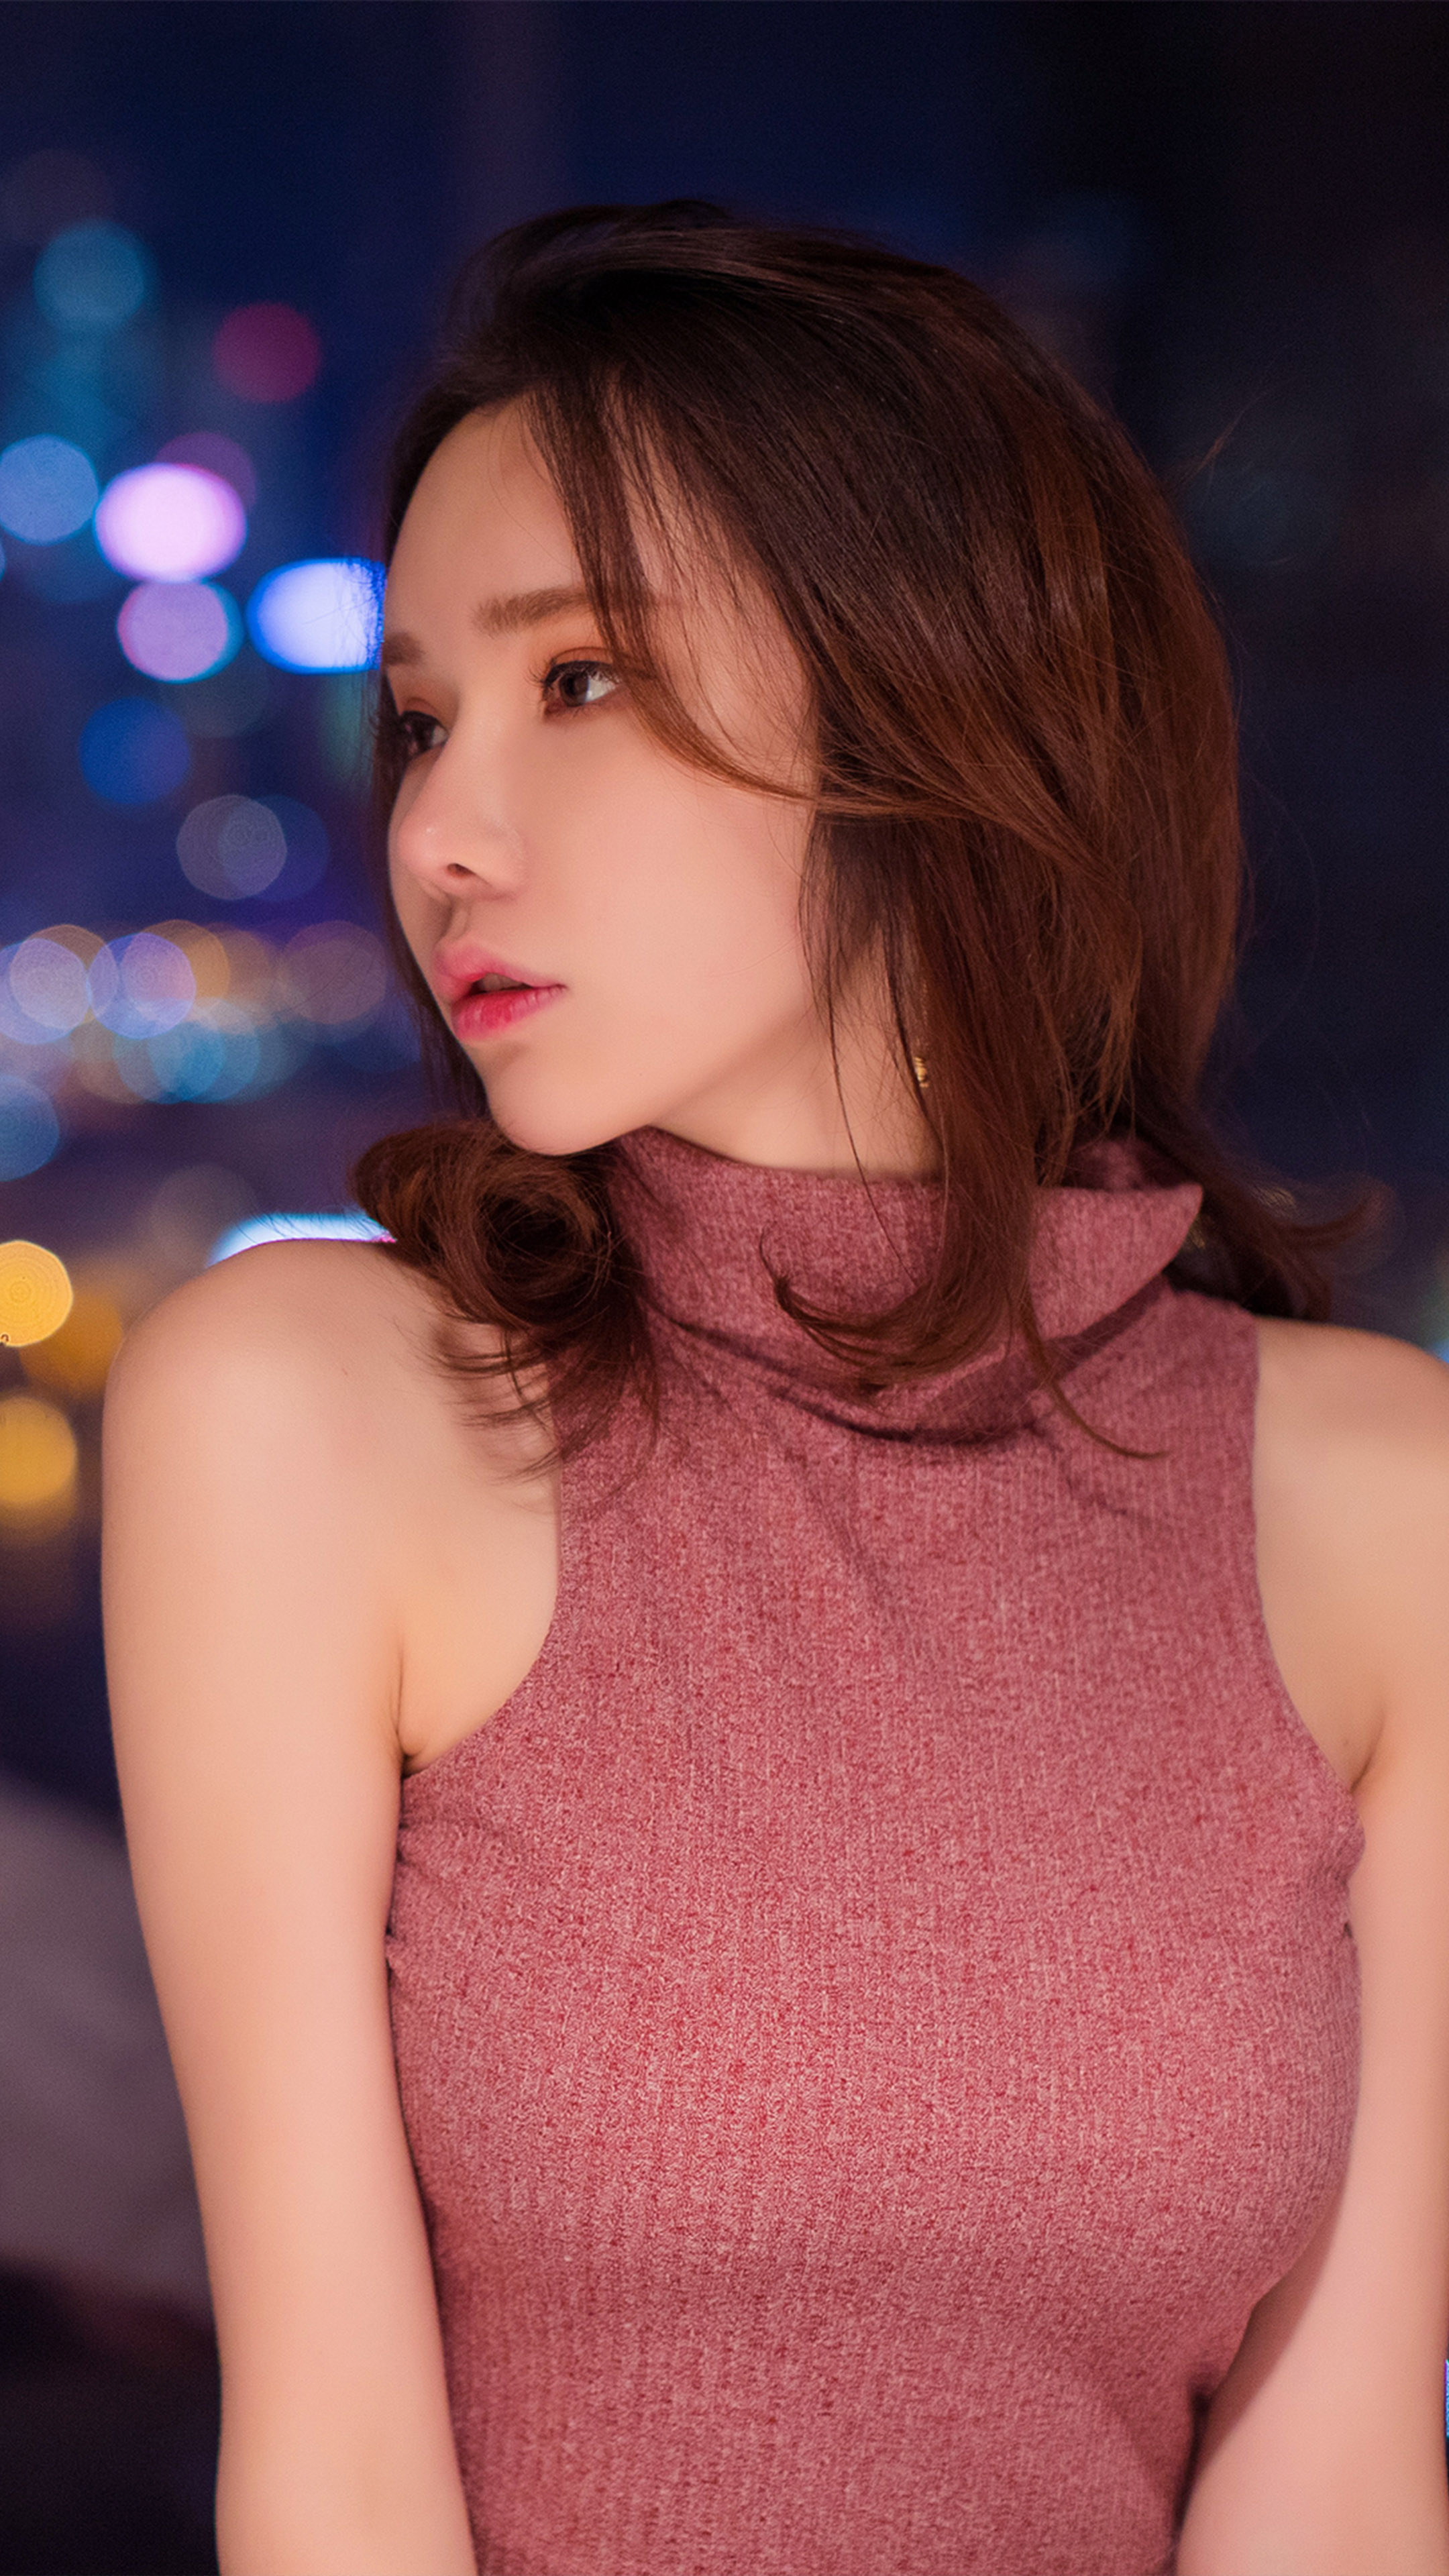 Download Wallpaper In 4k Ultra Hd - Cute Asian Girl , HD Wallpaper & Backgrounds